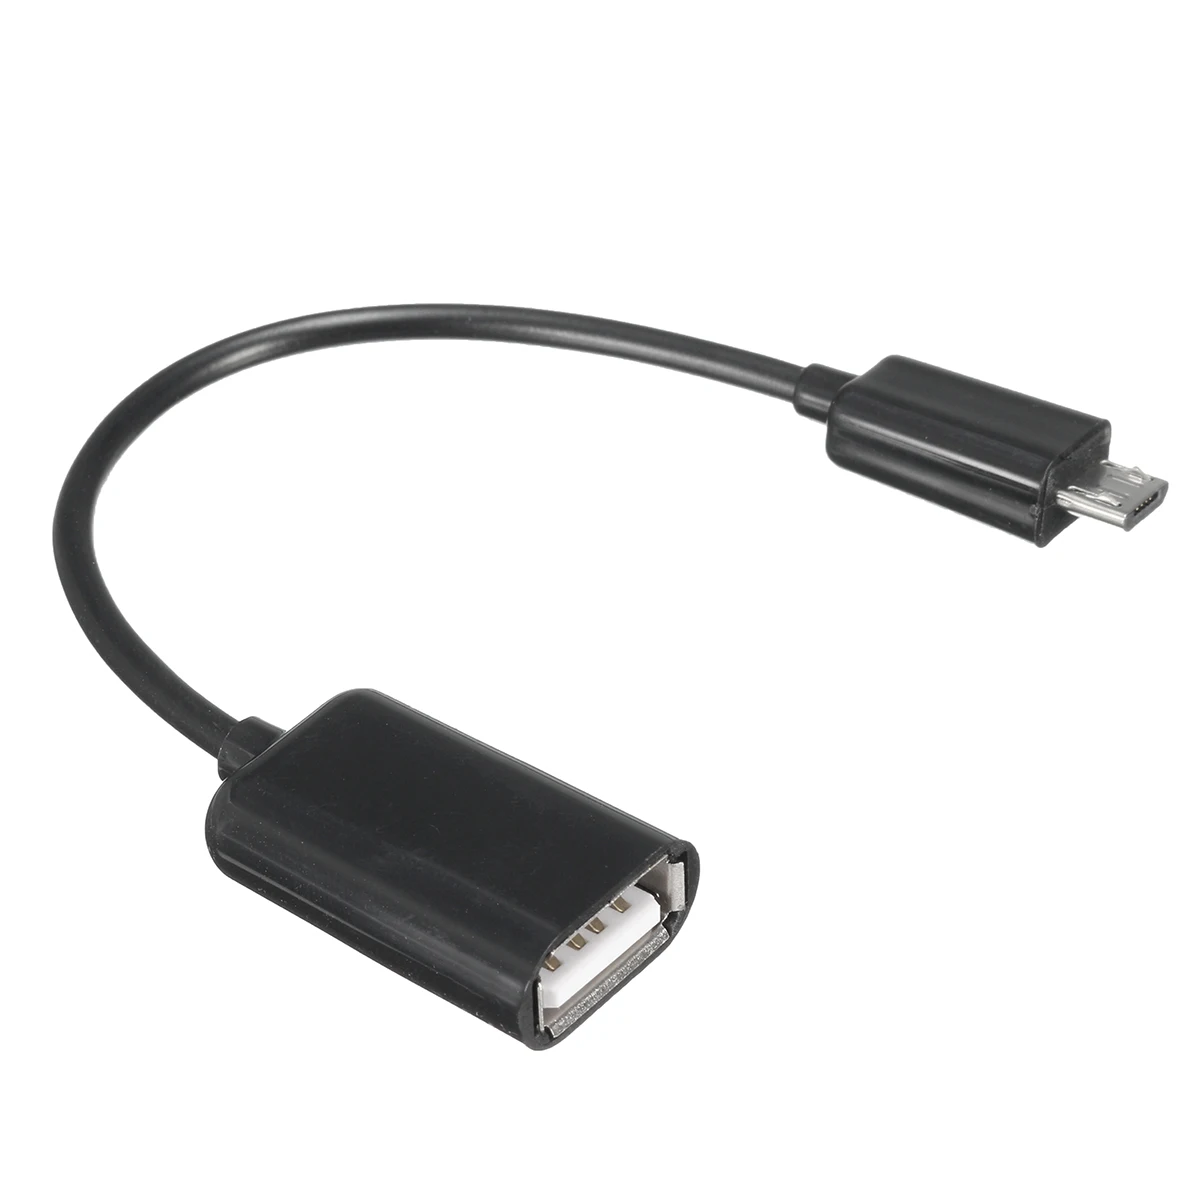 Аудио-видео Hdmi кабели мужчин и женщин адаптер+ Micro USB к USB кабель провод+ мужской разъем GPIO булавки для Raspberry Pi Zero комплект